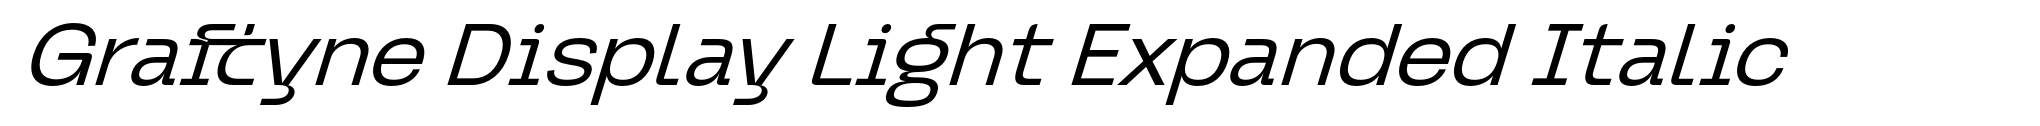 Graftyne Display Light Expanded Italic image